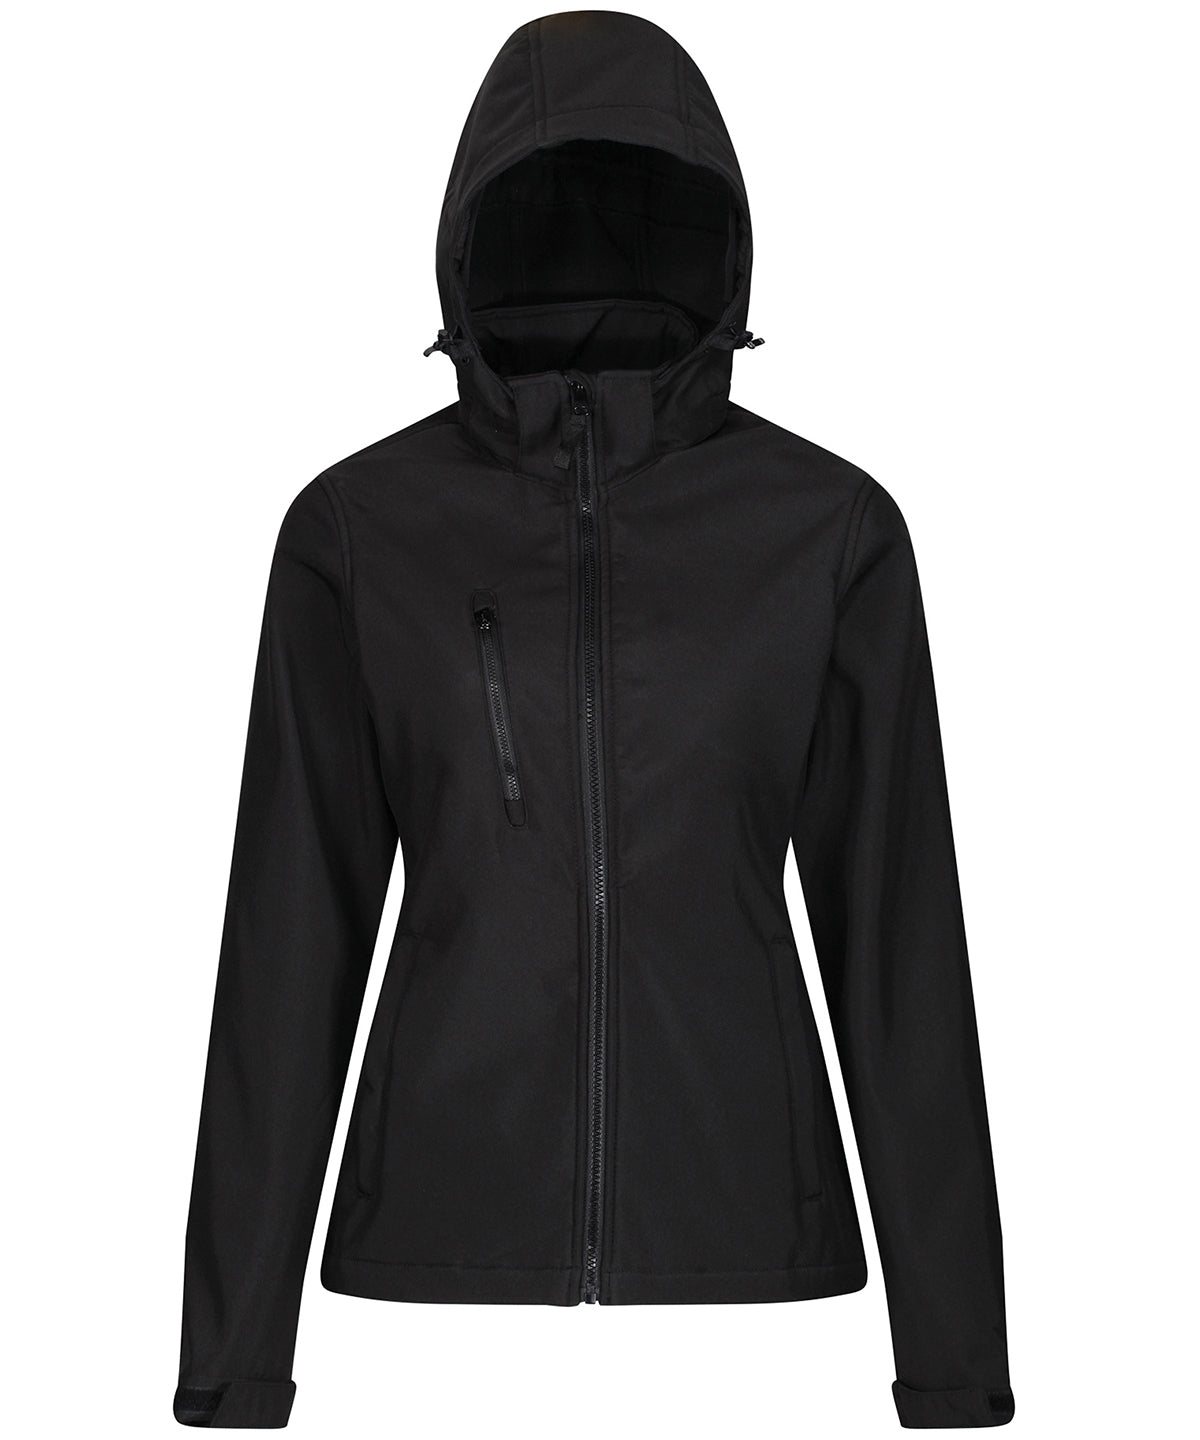 Jakkar - Women's Venturer 3-layer Hooded Softshell Jacket